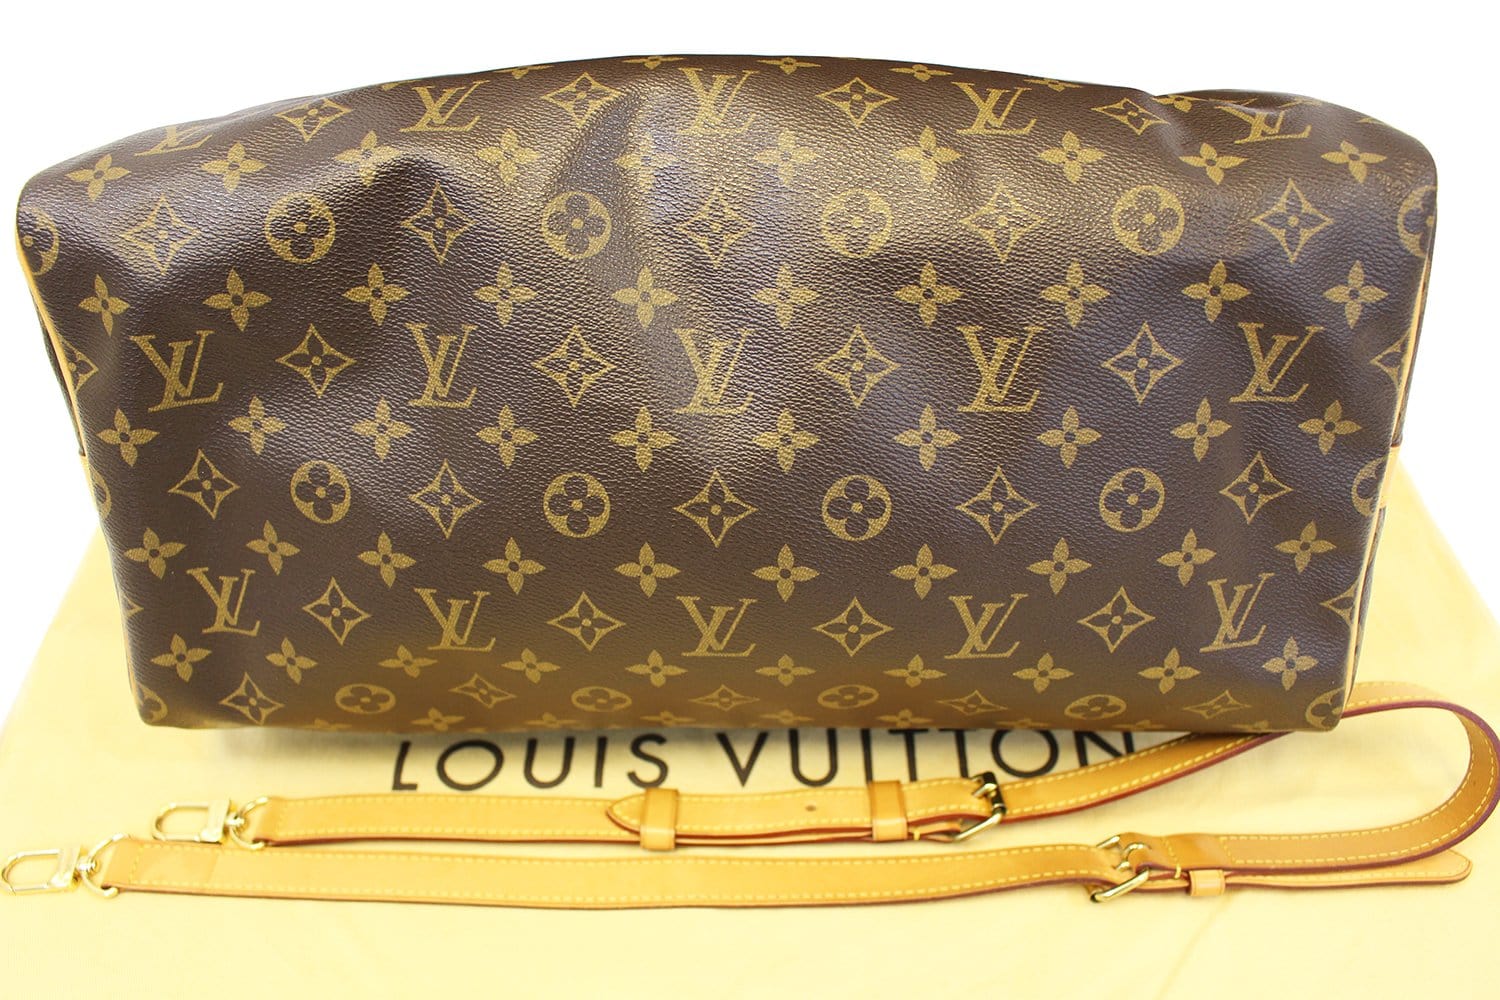 PRELOVED Louis Vuitton Monogram Speedy 40 Bag VI881 090722 – KimmieBBags LLC